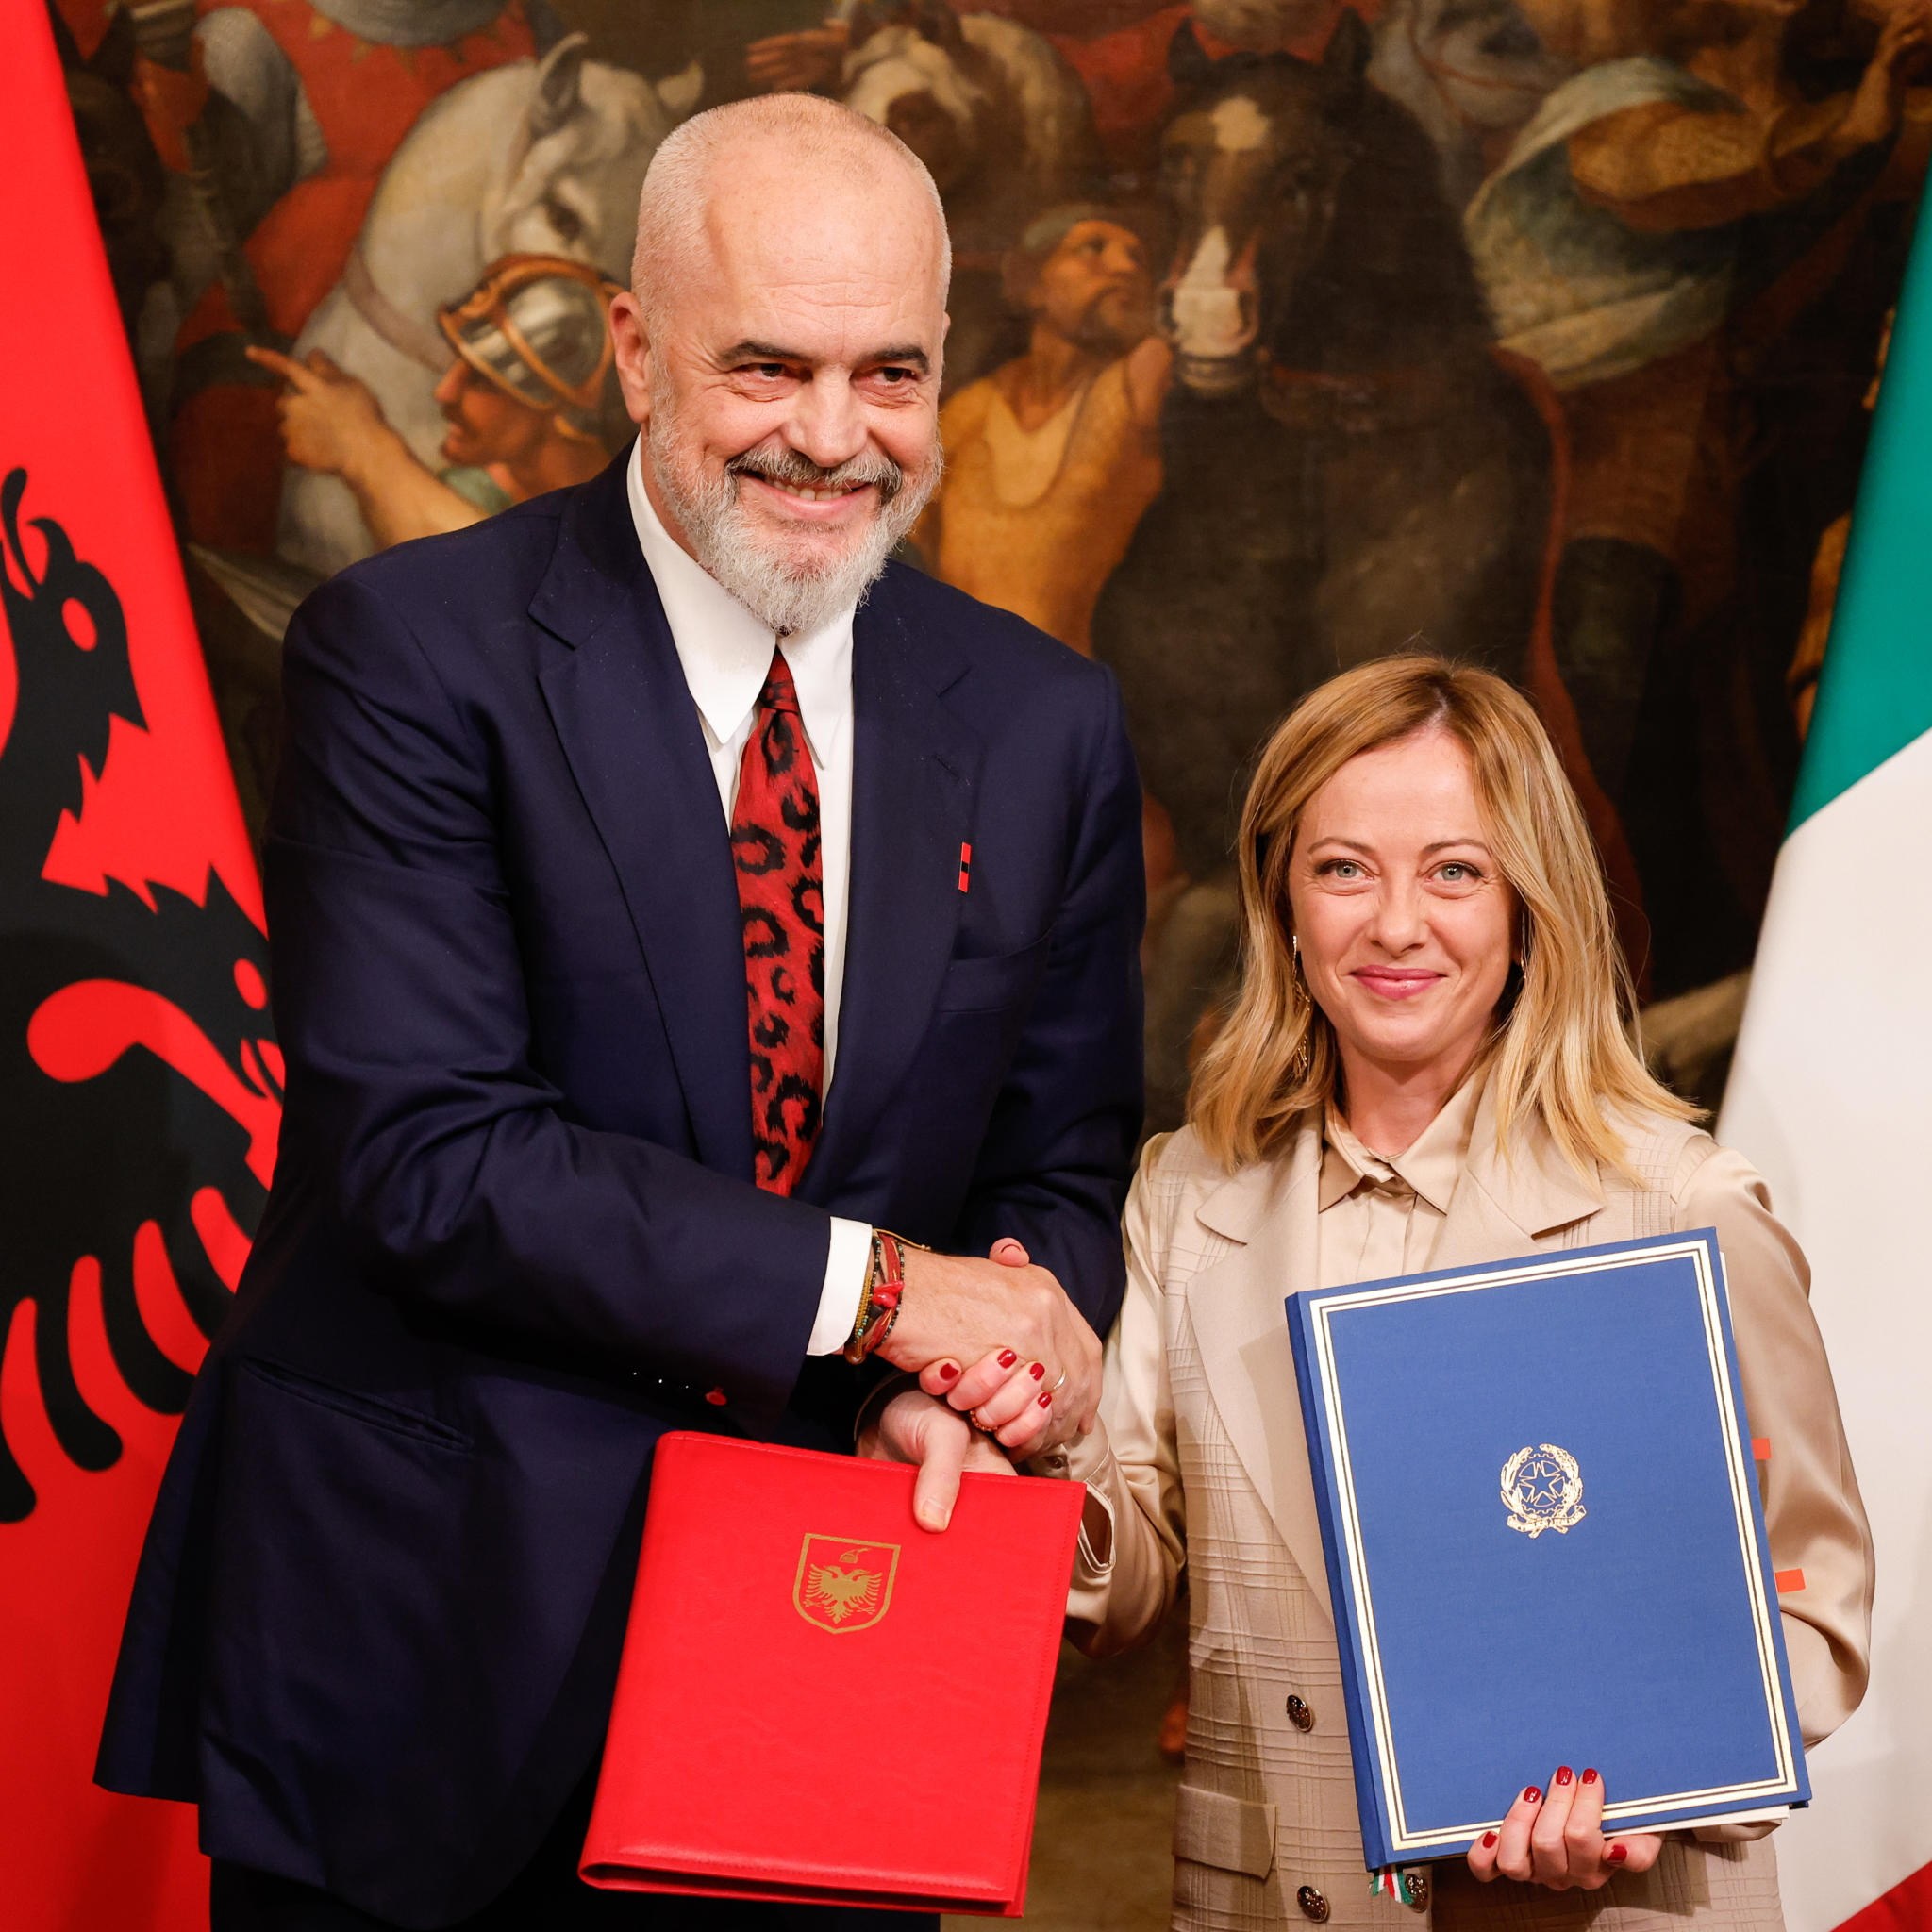 Executive Director of “Sami Frashëri” Comments on Albanian-Italian Migration Agreement for Middle East Eye